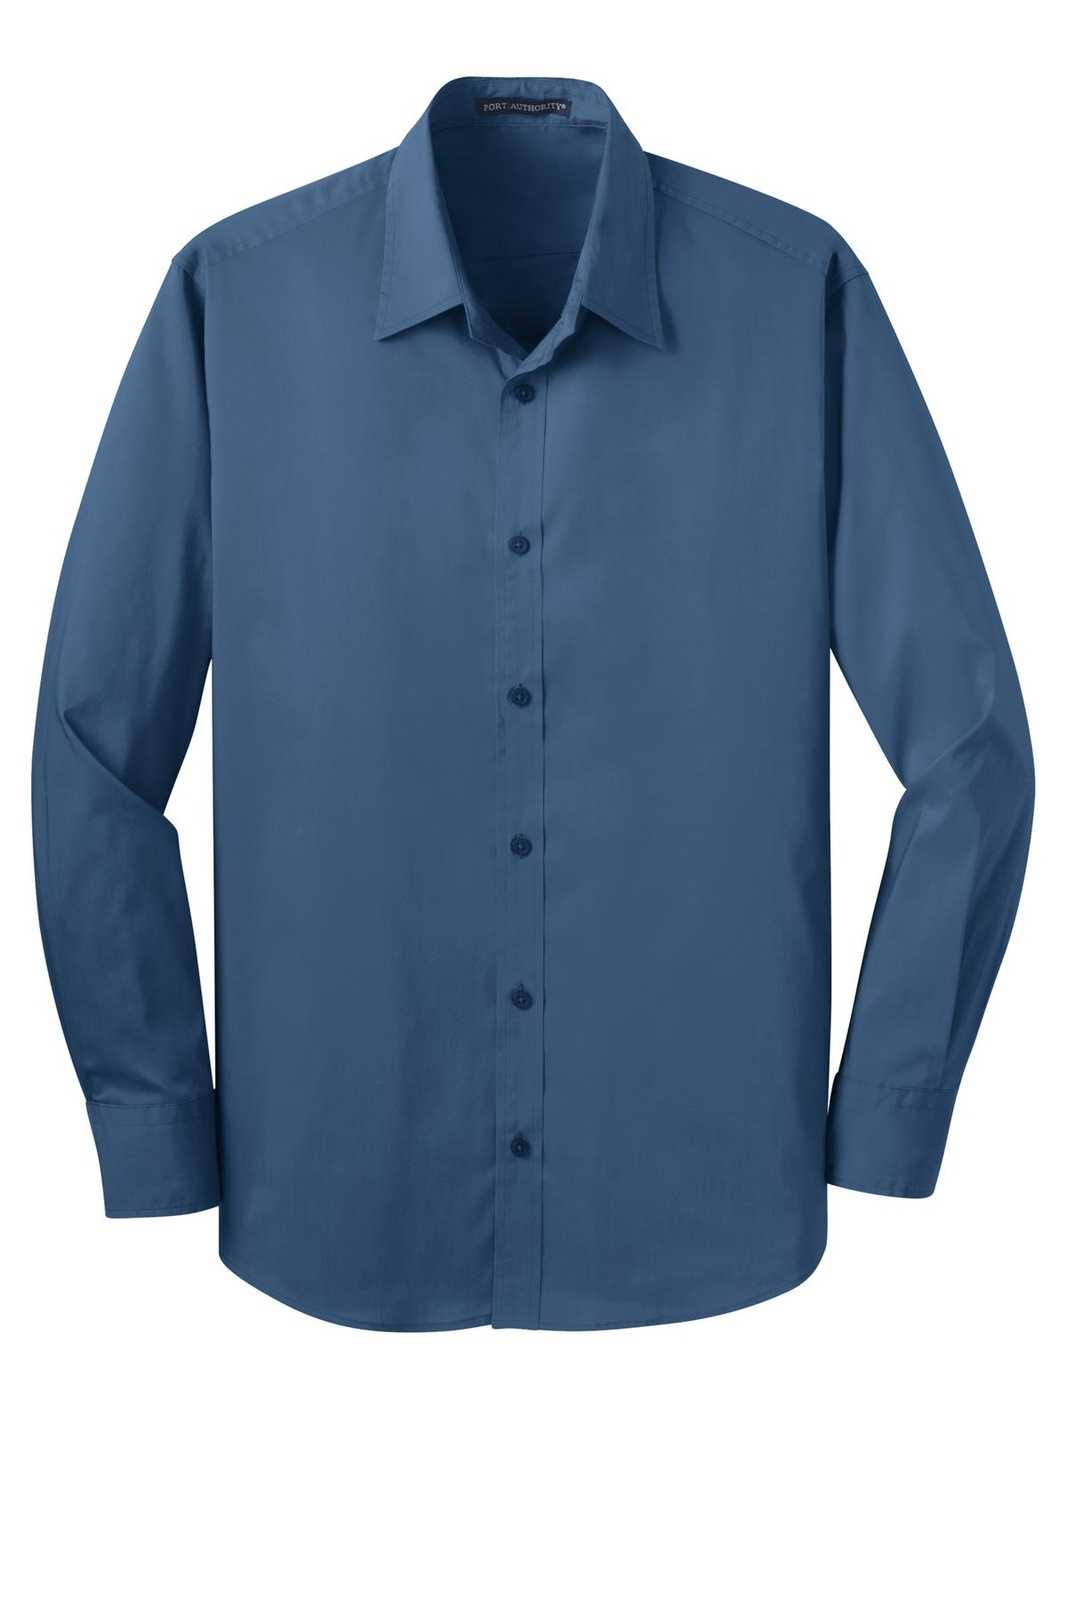 Port Authority S646 Stretch Poplin Shirt - Moonlight Blue - HIT a Double - 5